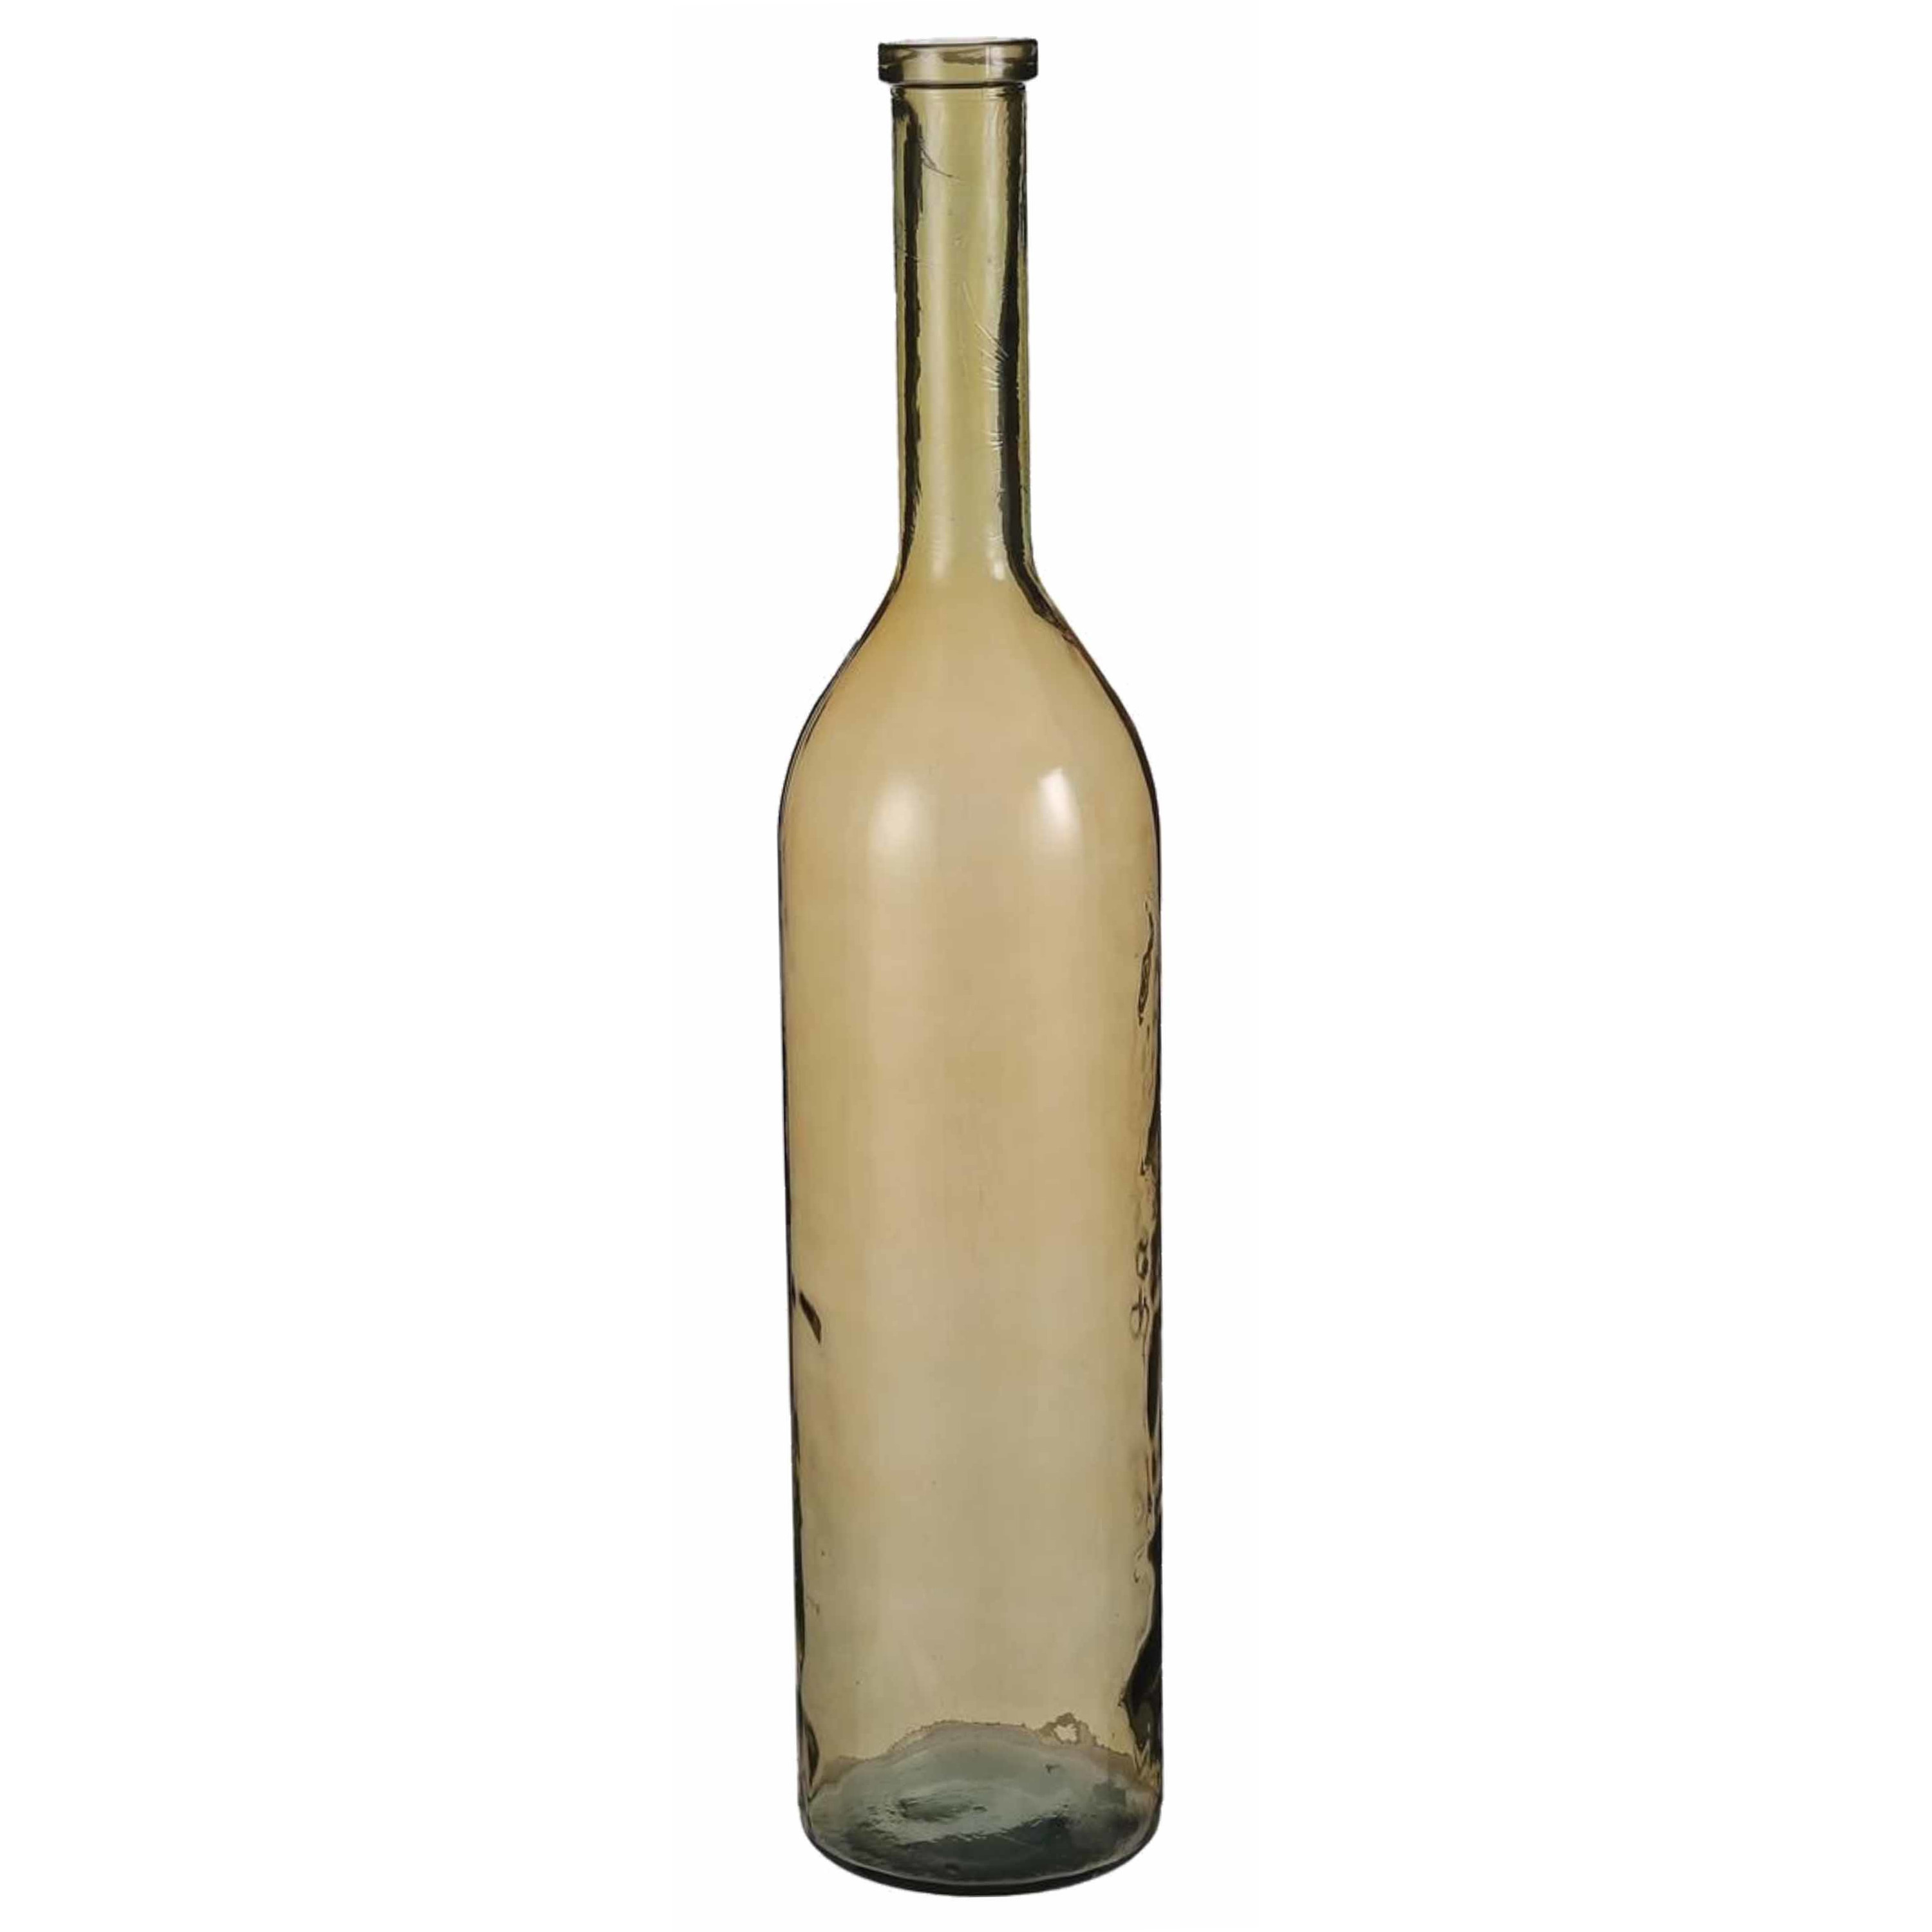 Transparante/okergele grote fles vaas/vazen van eco glas 21 x 100 cm